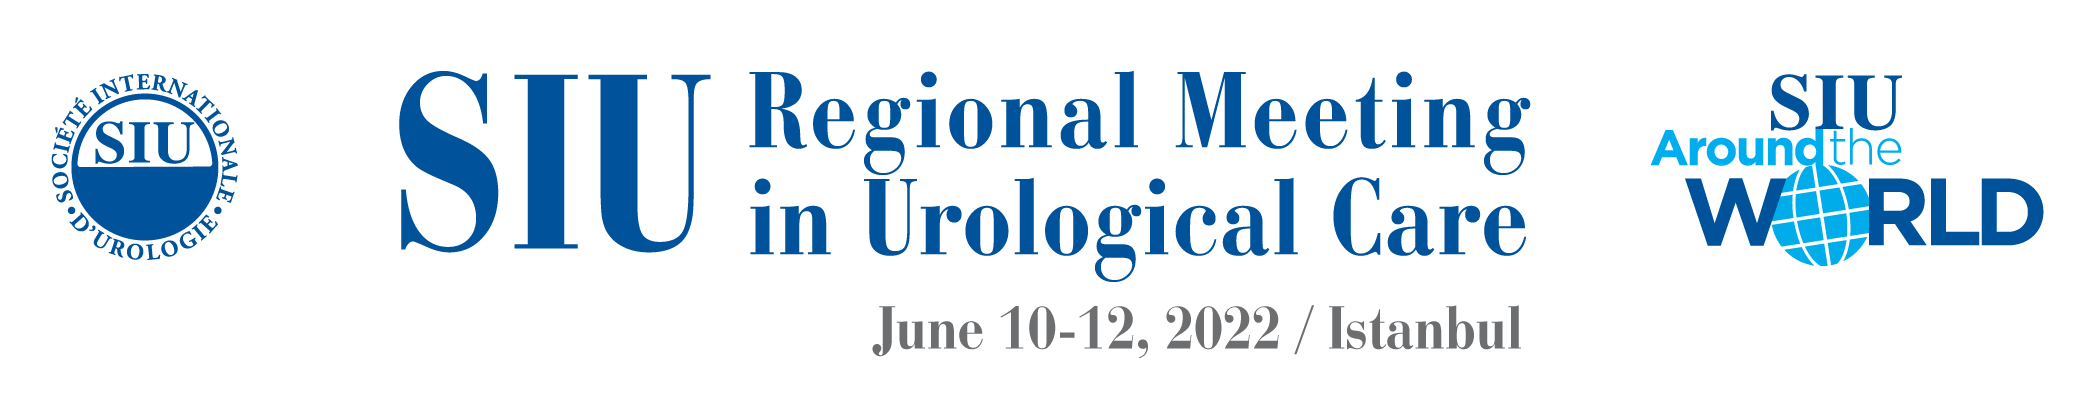 SIU Regional Meeting in Urological Care